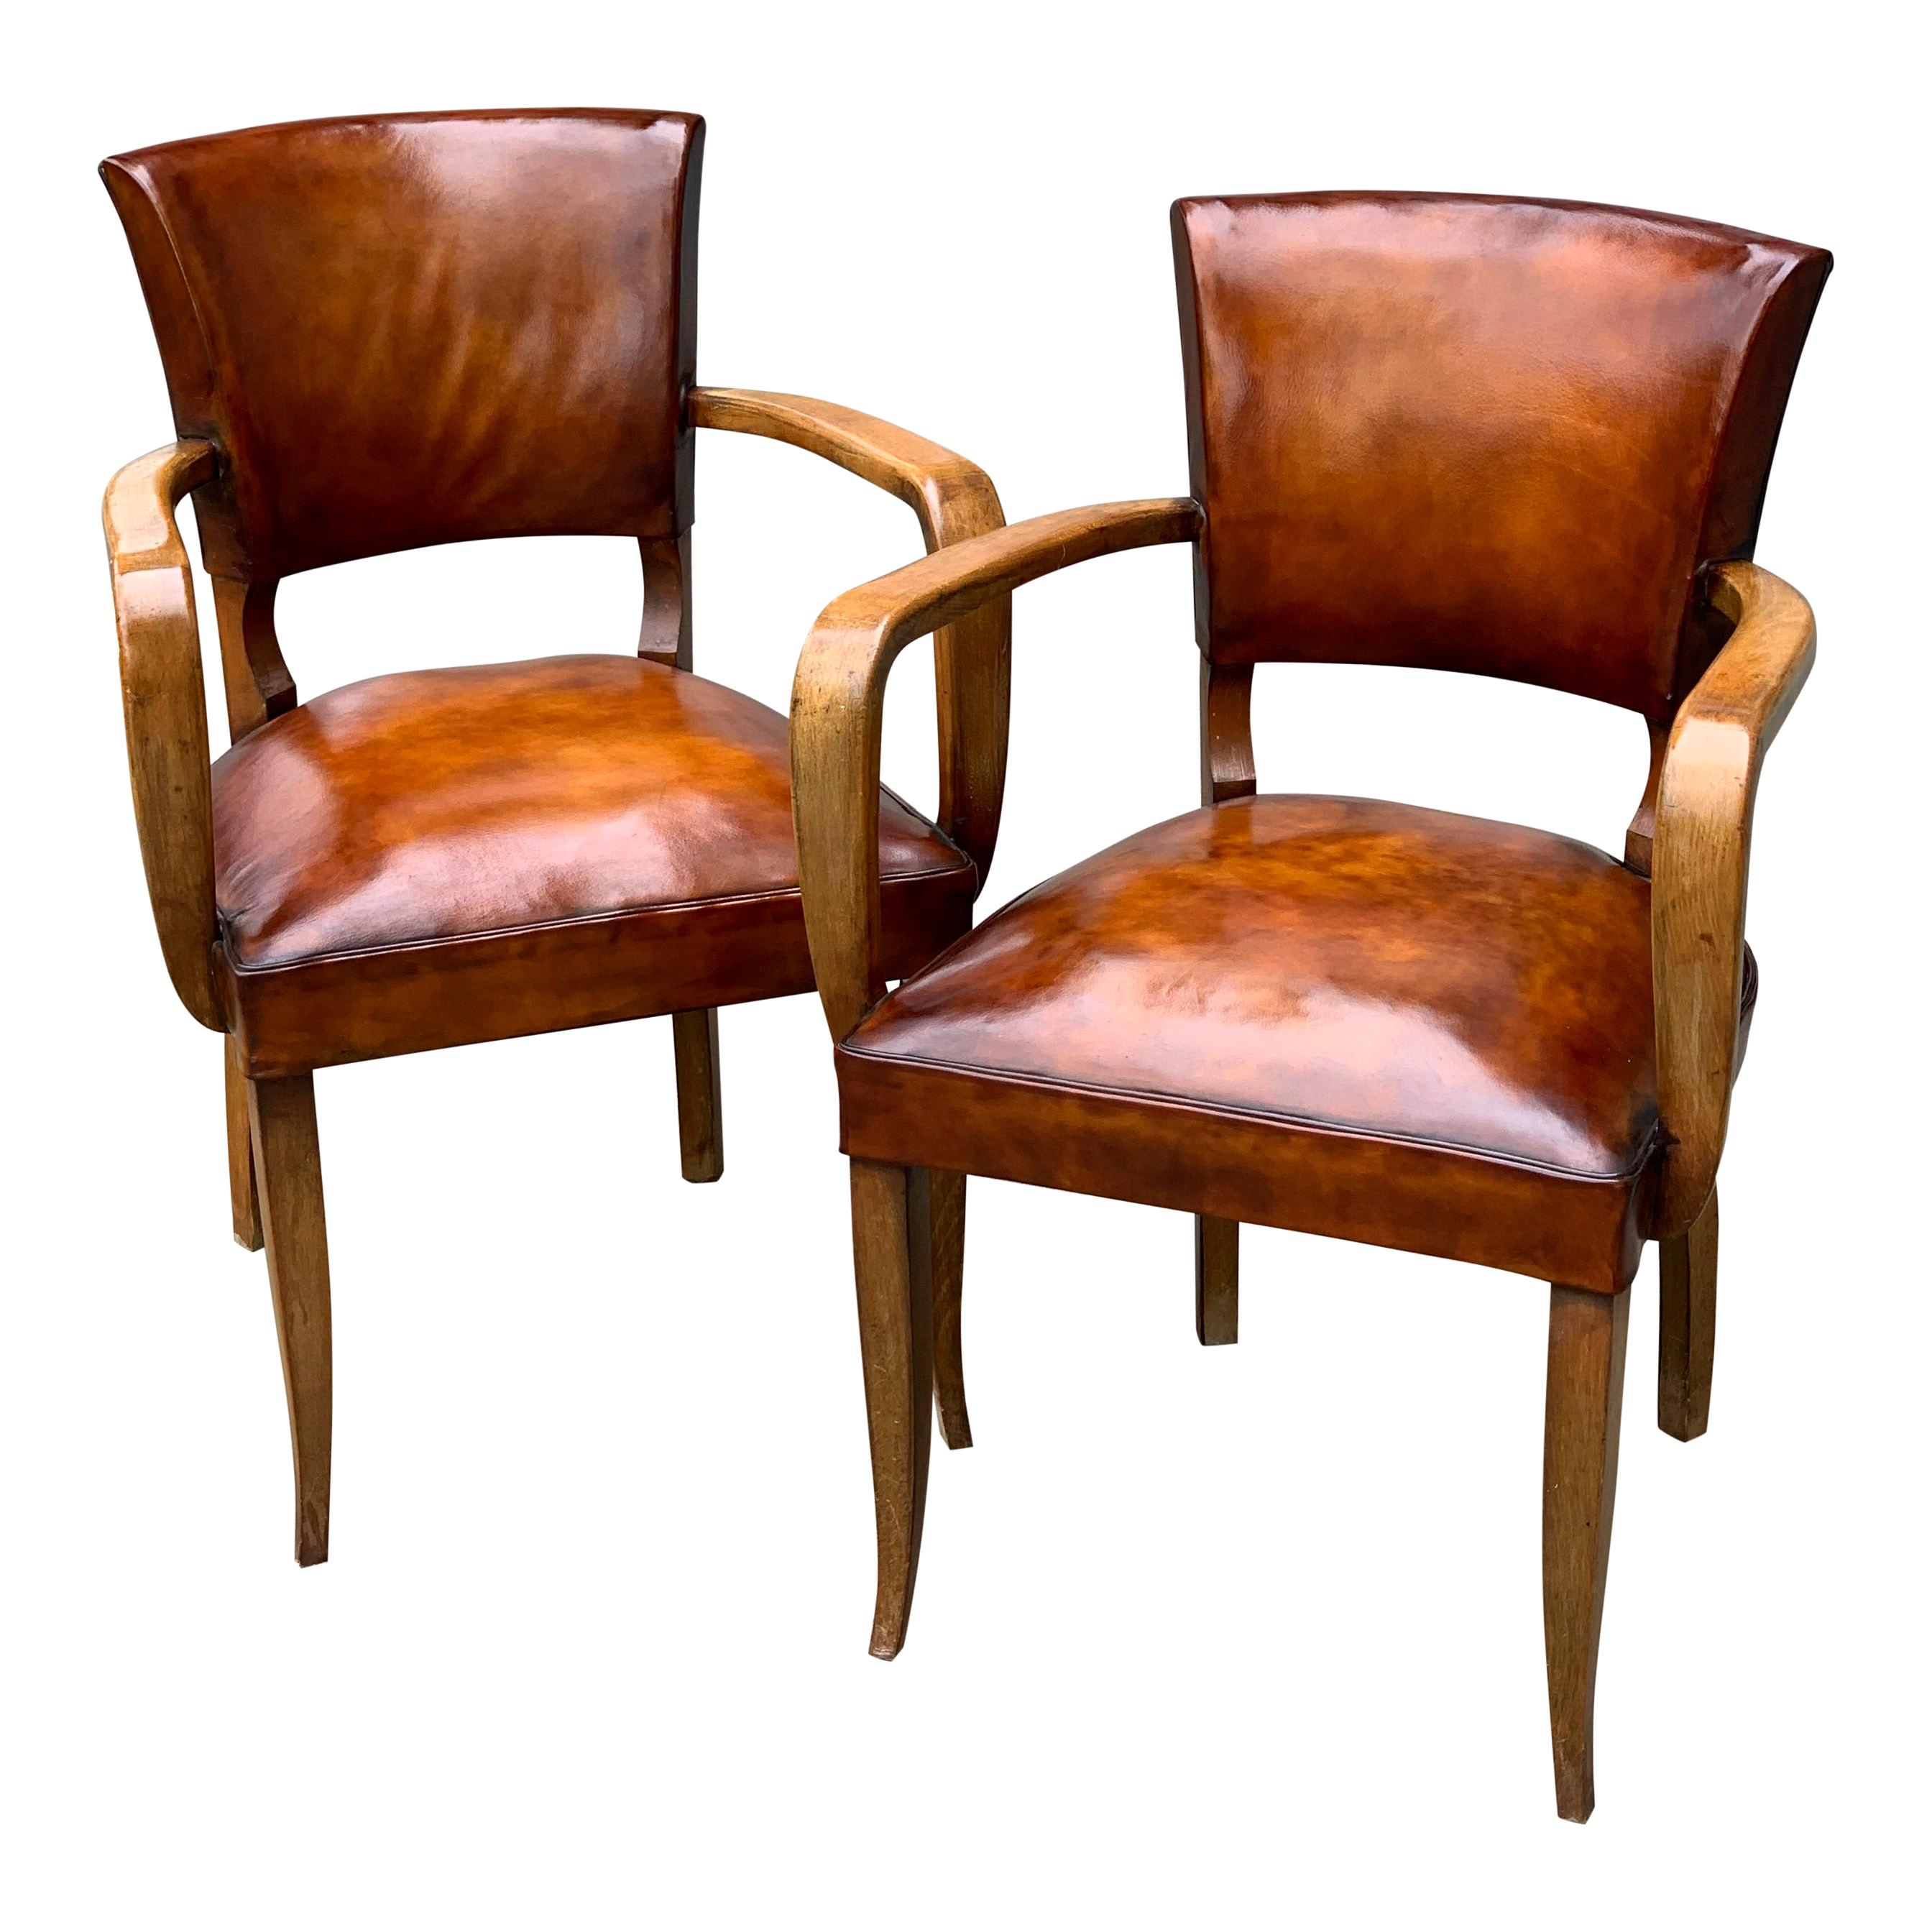 Pair of 1940s Leather Bridge Chair